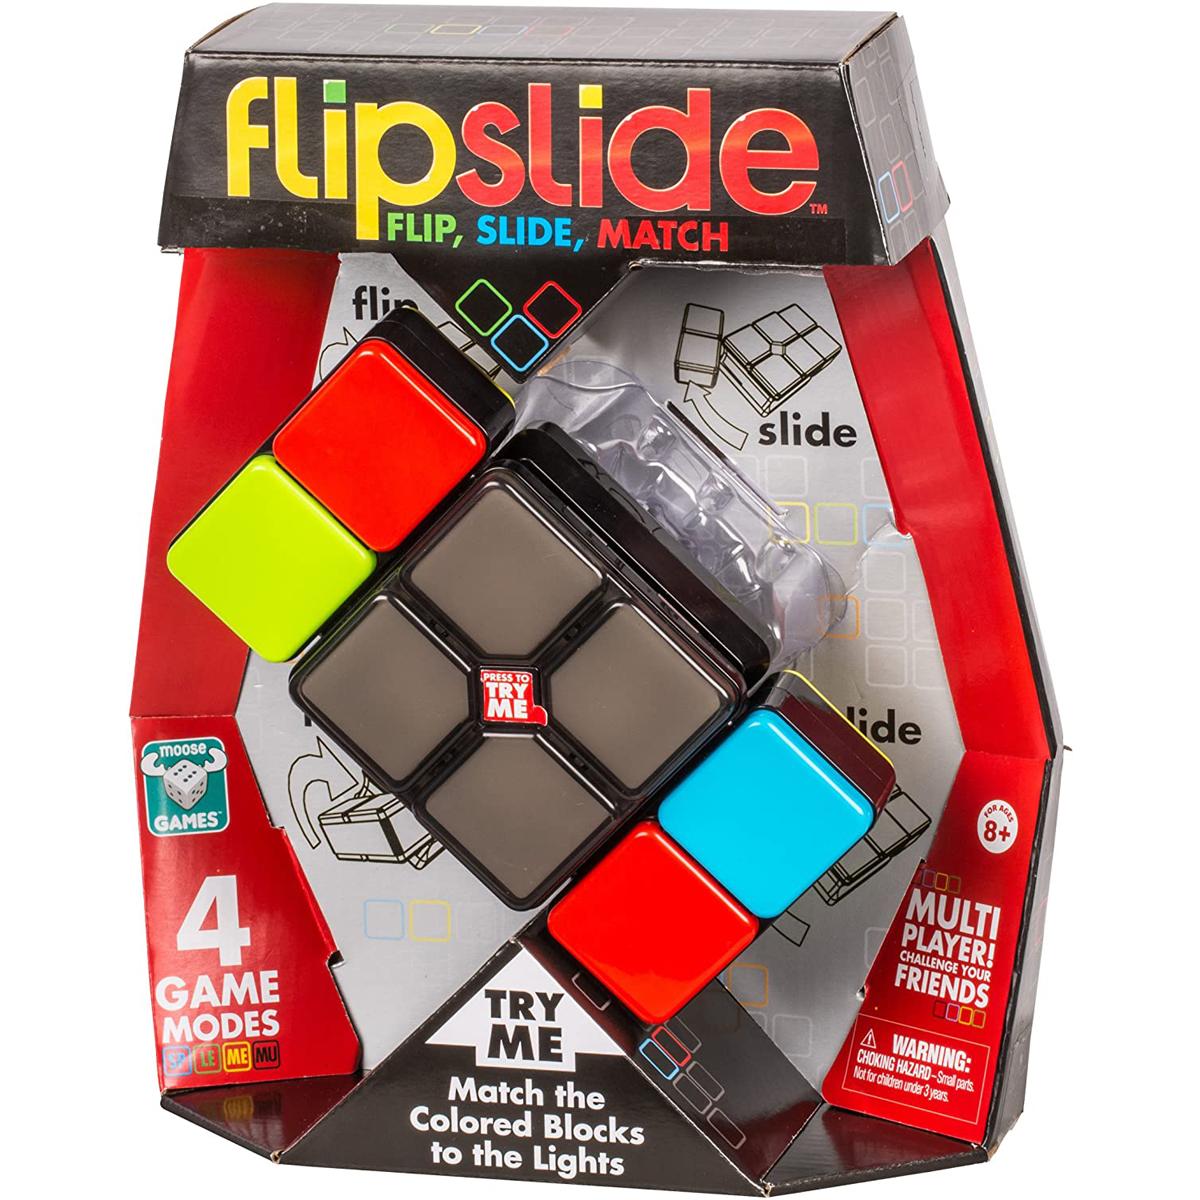 Flipslide Game Electronic Handheld Game for $11.99